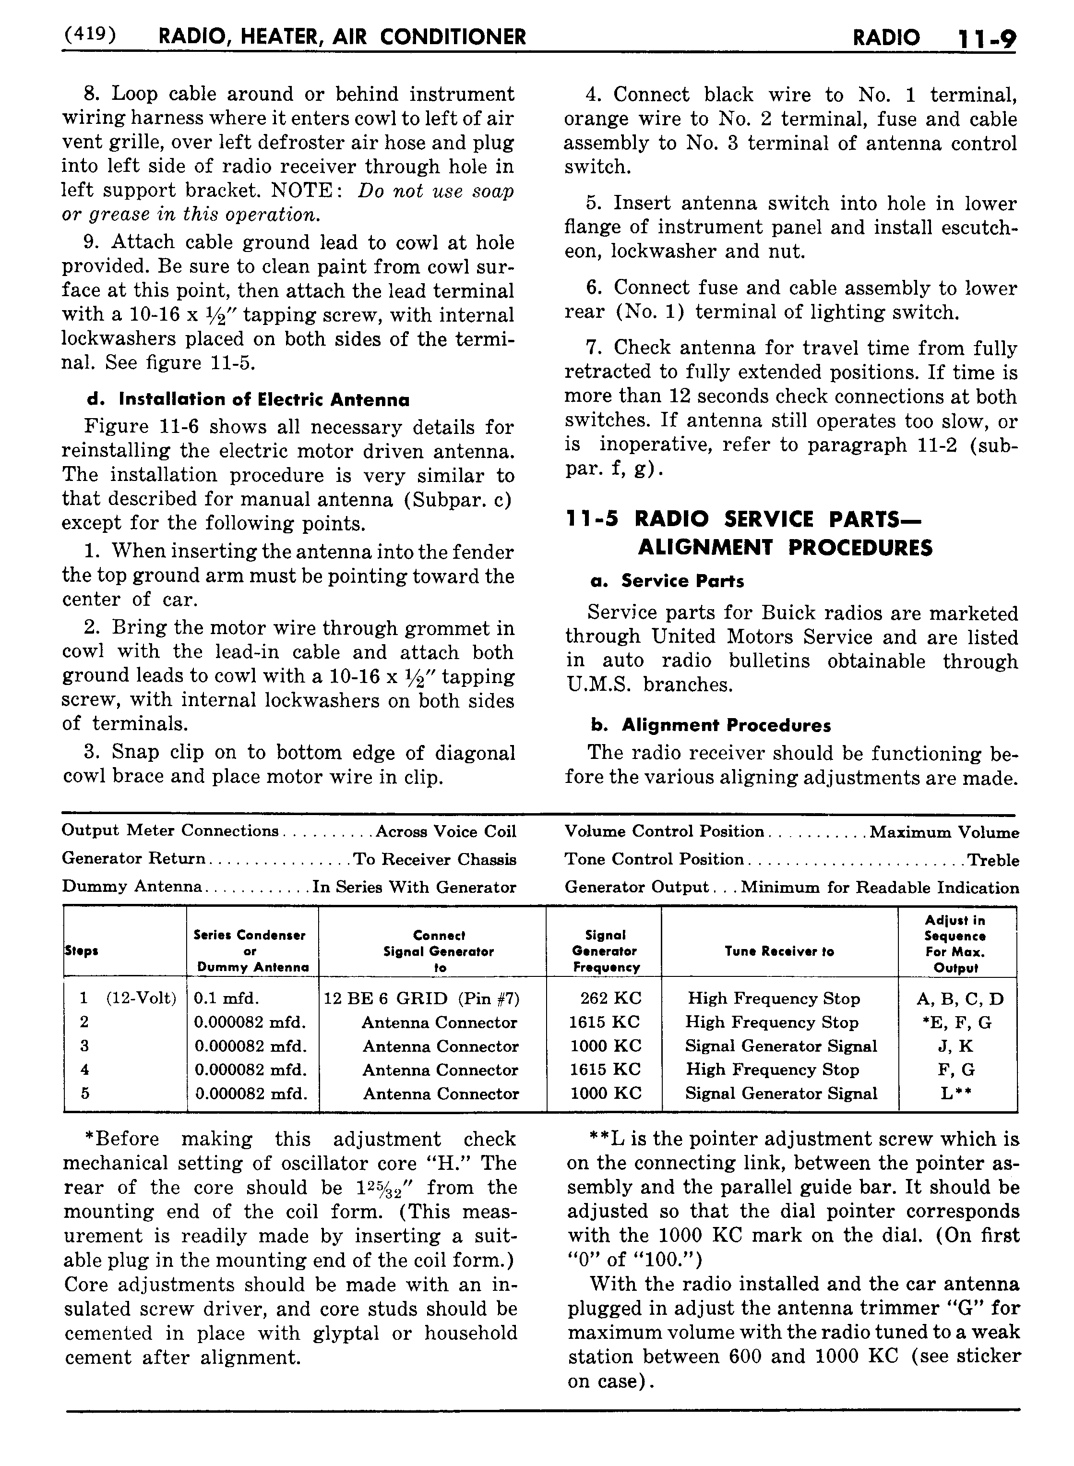 n_12 1954 Buick Shop Manual - Radio-Heat-AC-009-009.jpg